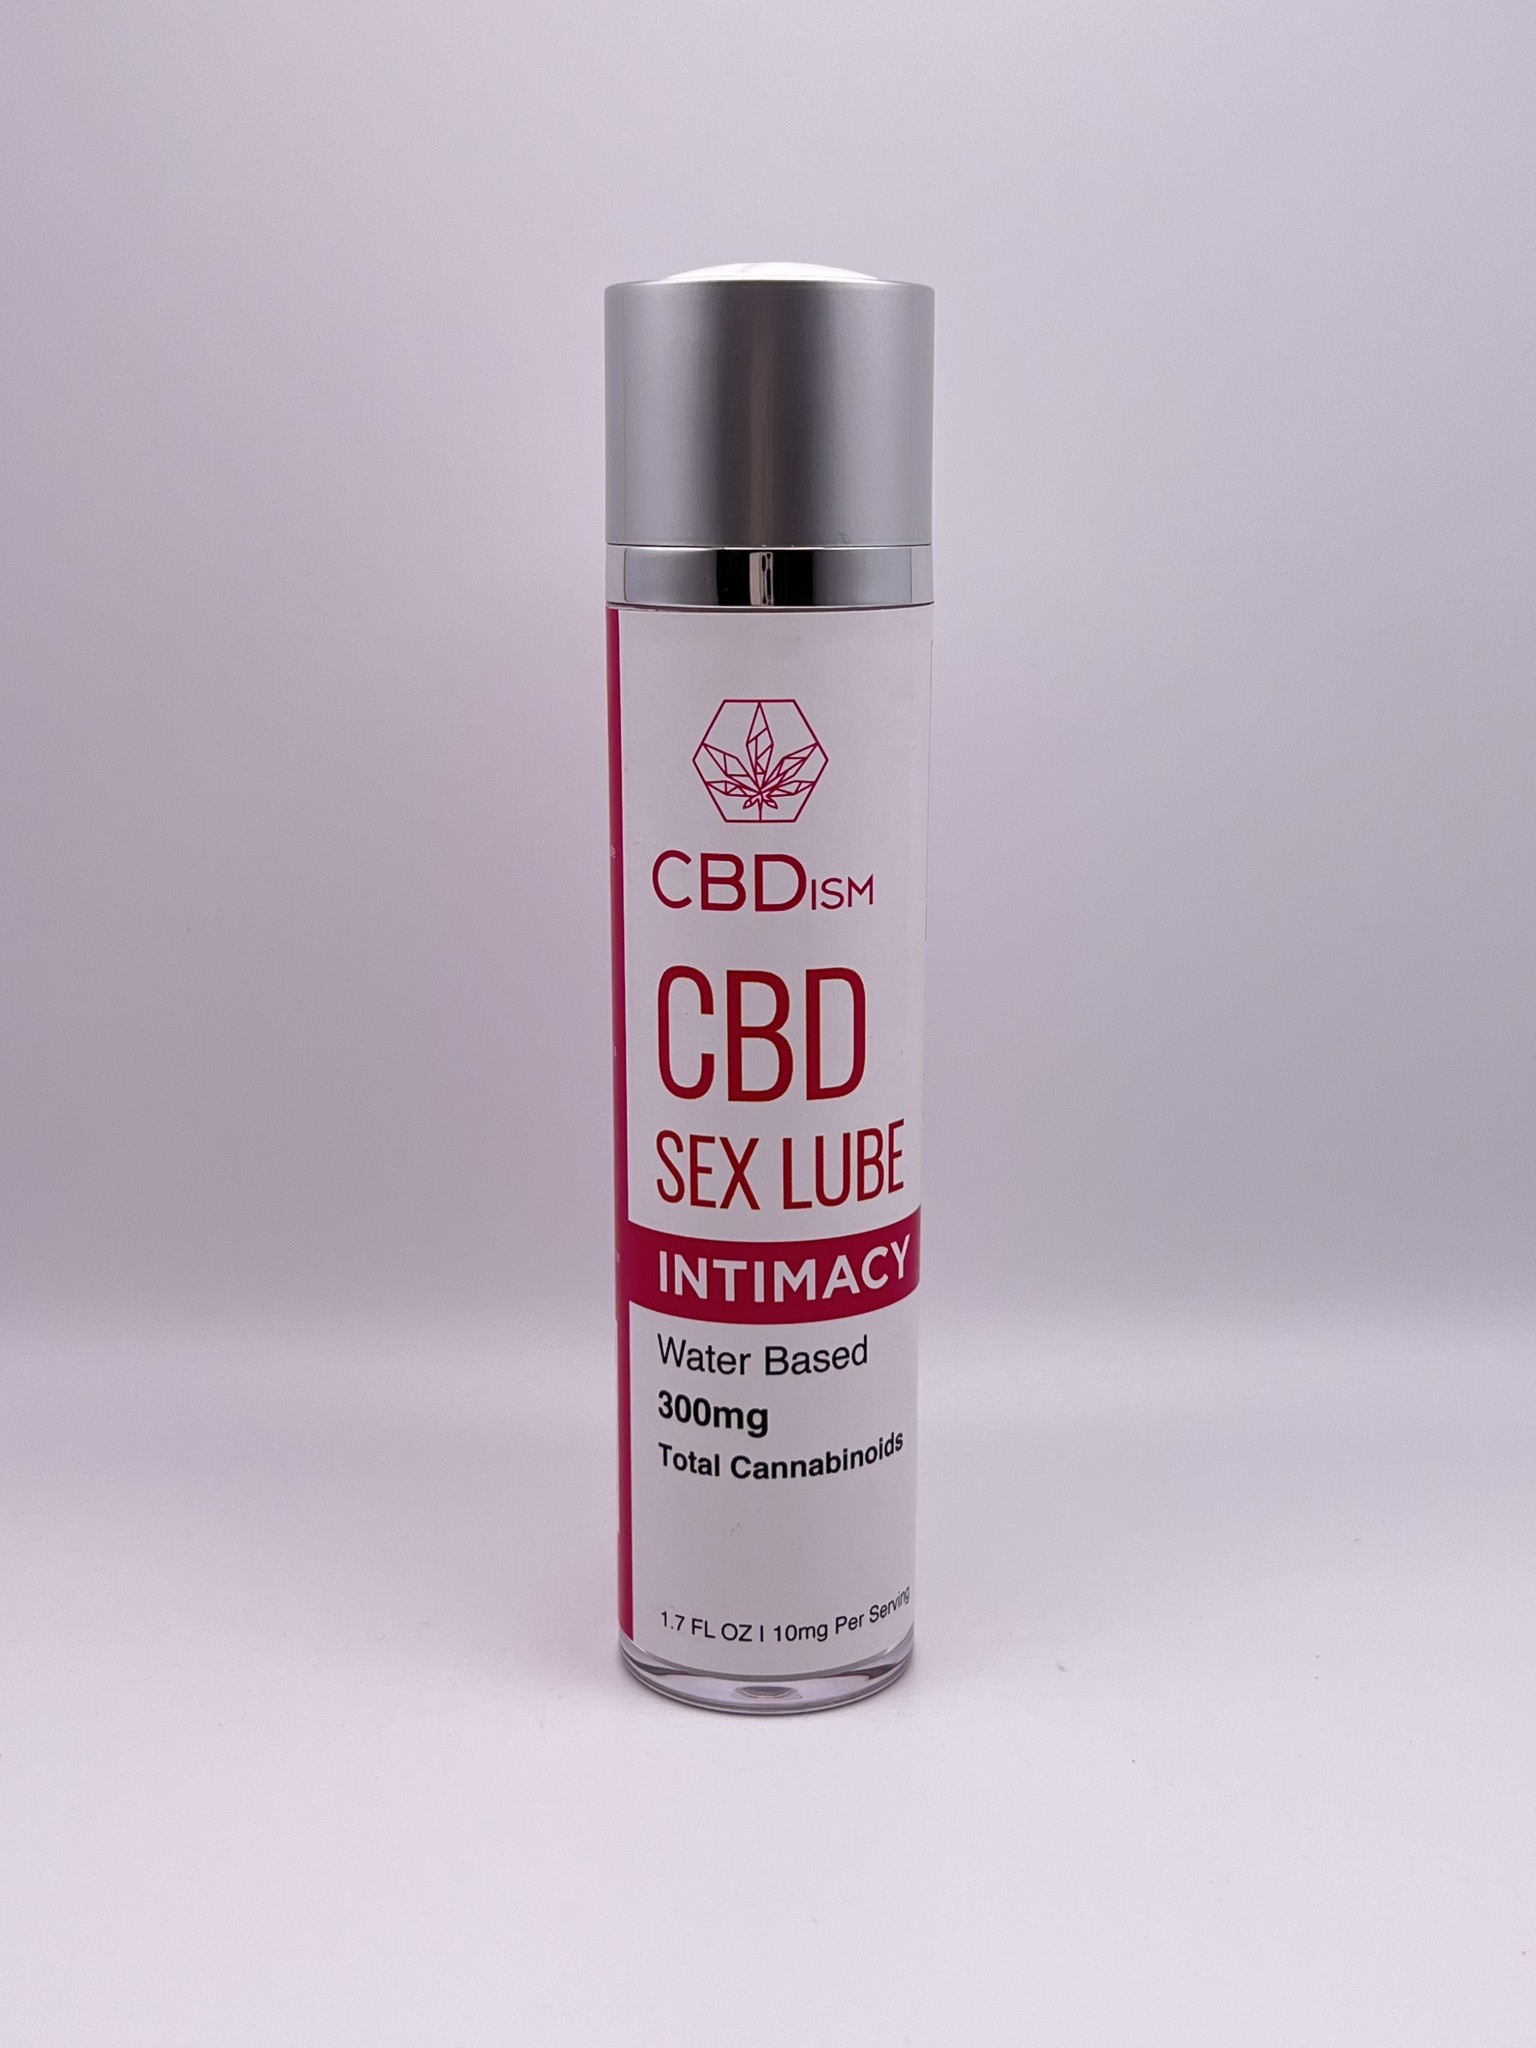 CBD ISM CBDism Sex Lube Intimacy 300 Mg (water based)